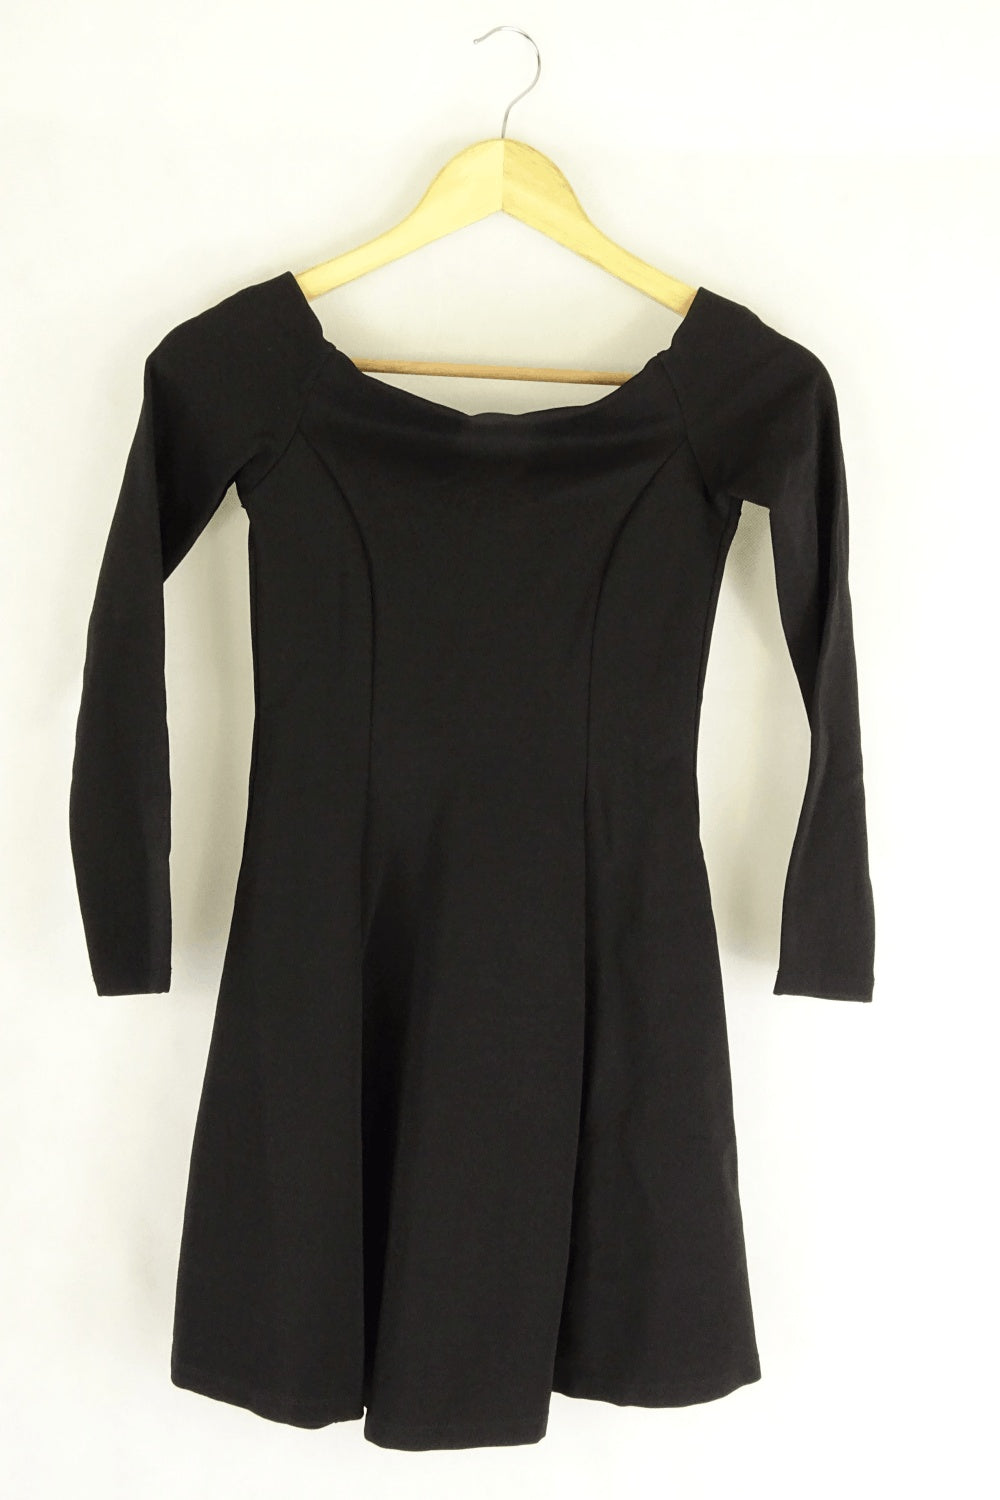 H&M Black Dress 8